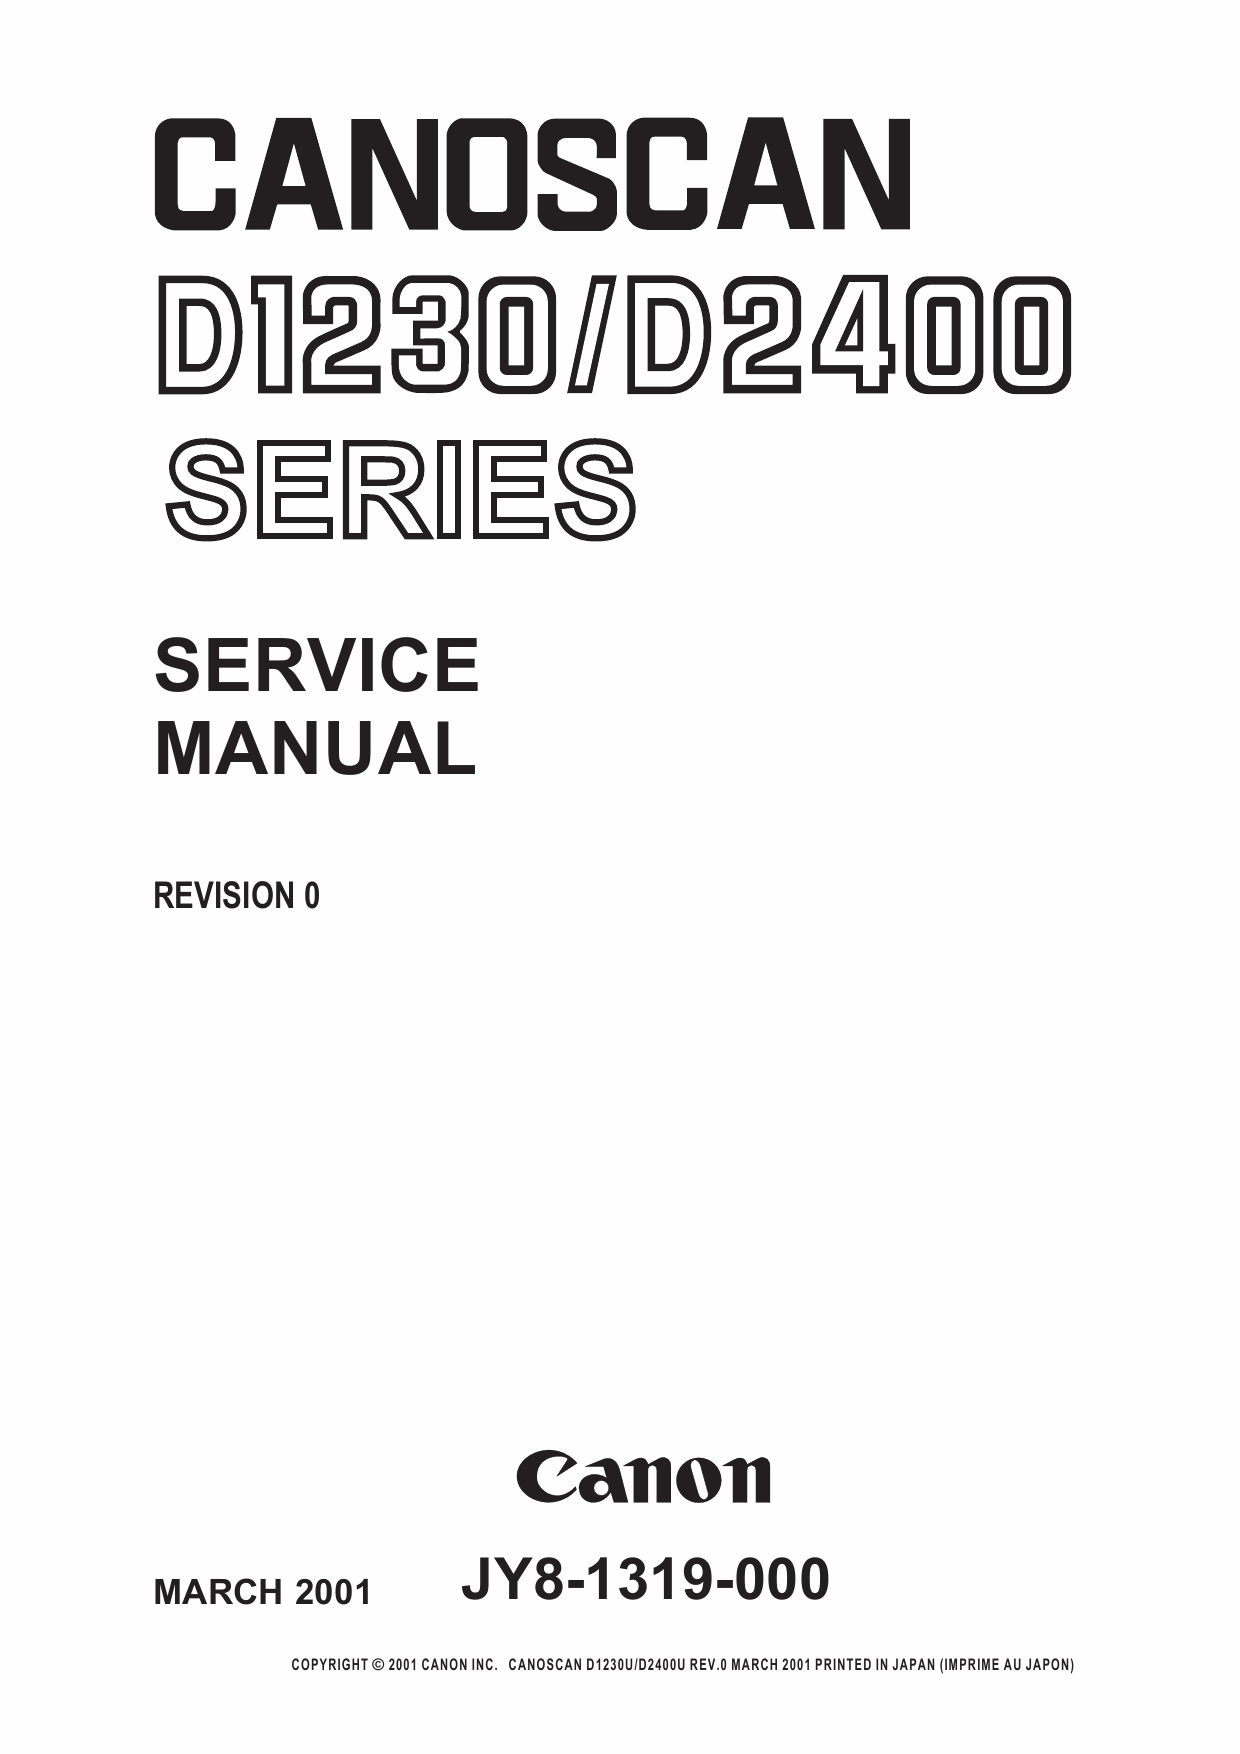 Canon Options CS-D1230 CanoScan D1230 D2400 Parts and Service Manual-1